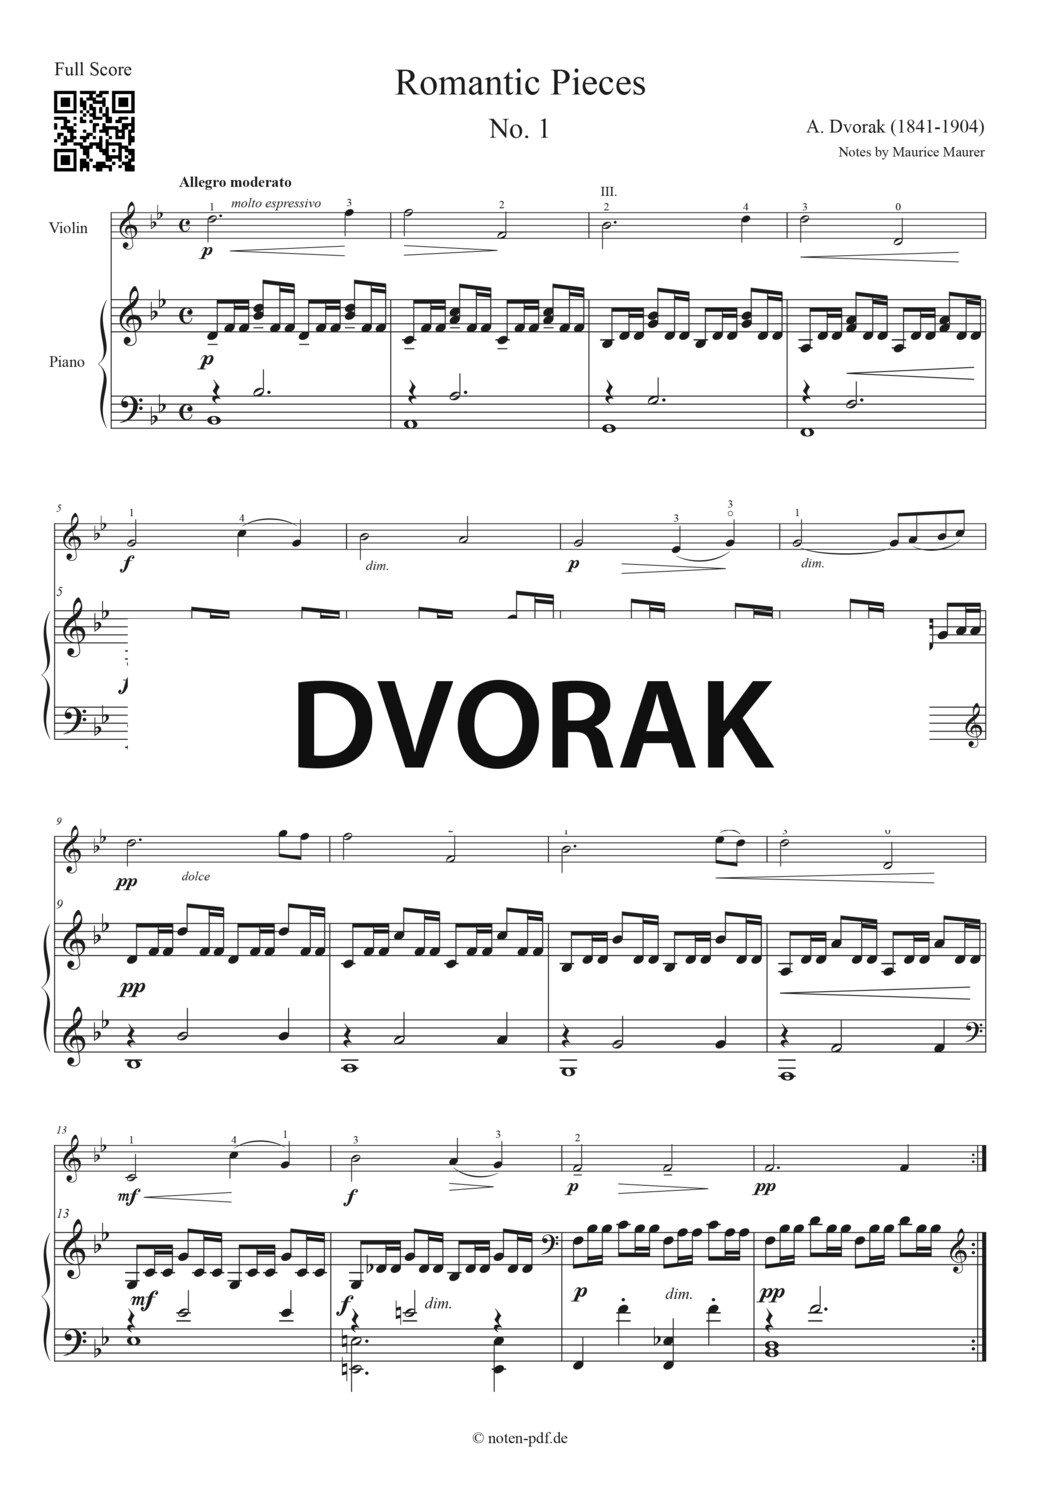 Dvorak: Romantic Pieces - No. 1 + MP3